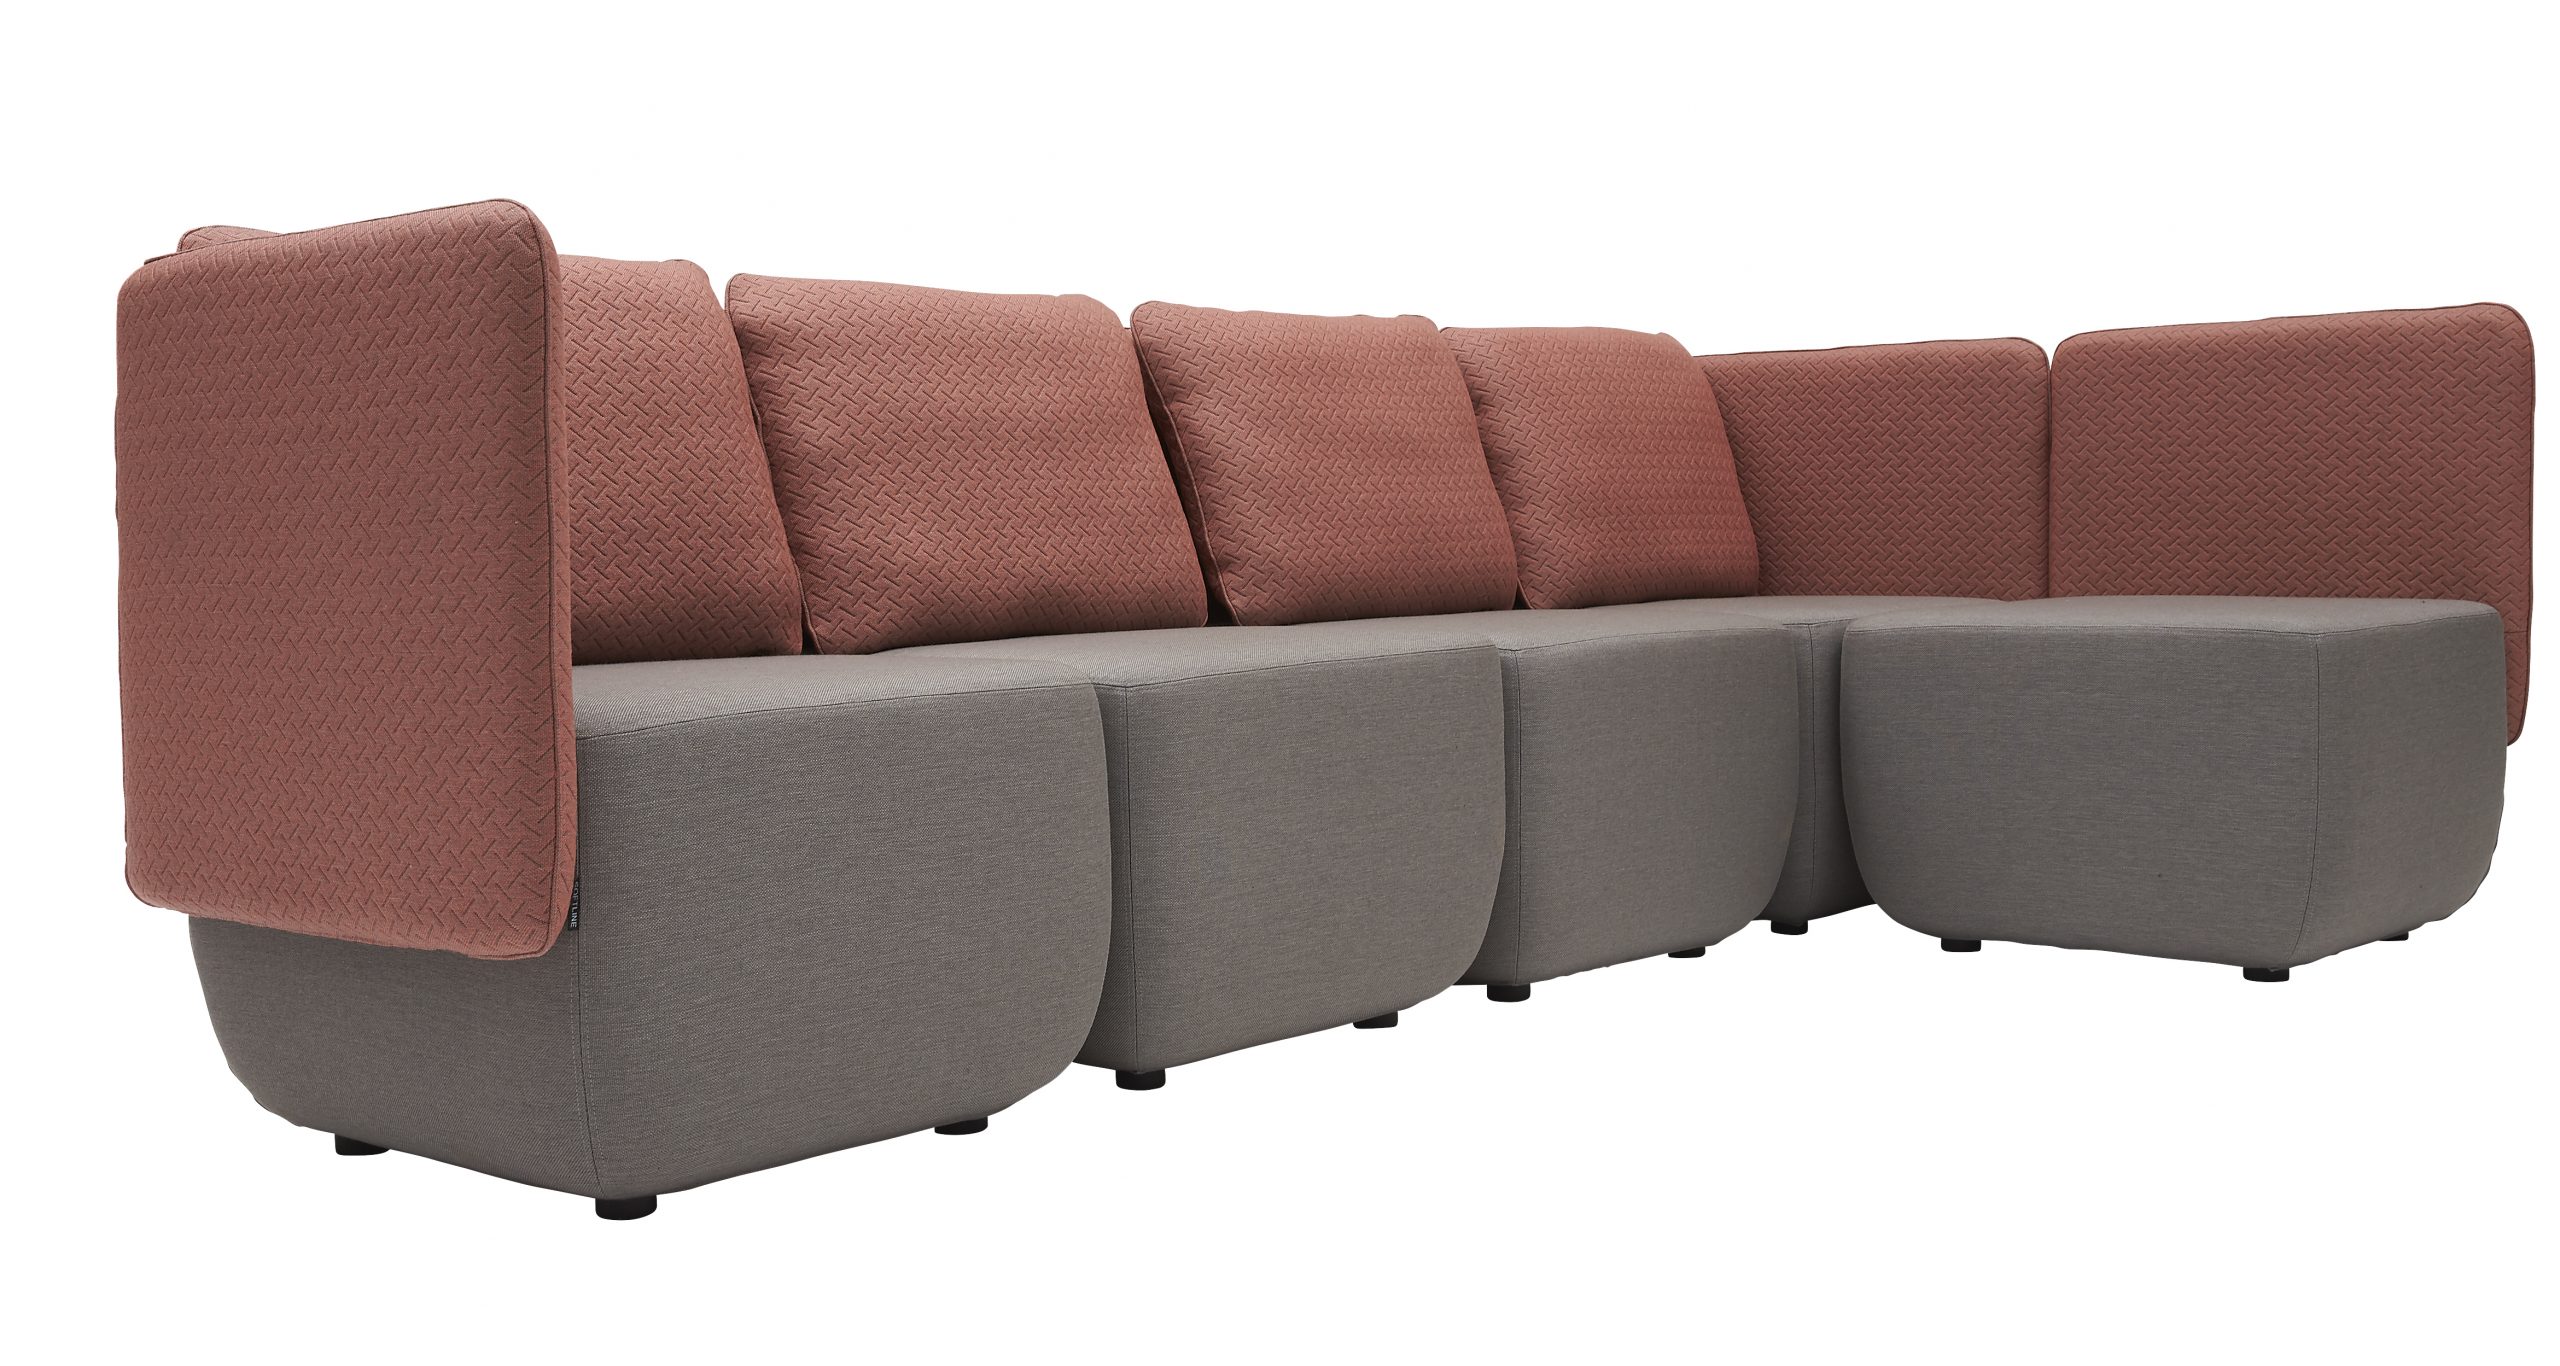 opera-modular-sofa-high-res-27-scaled.jpg